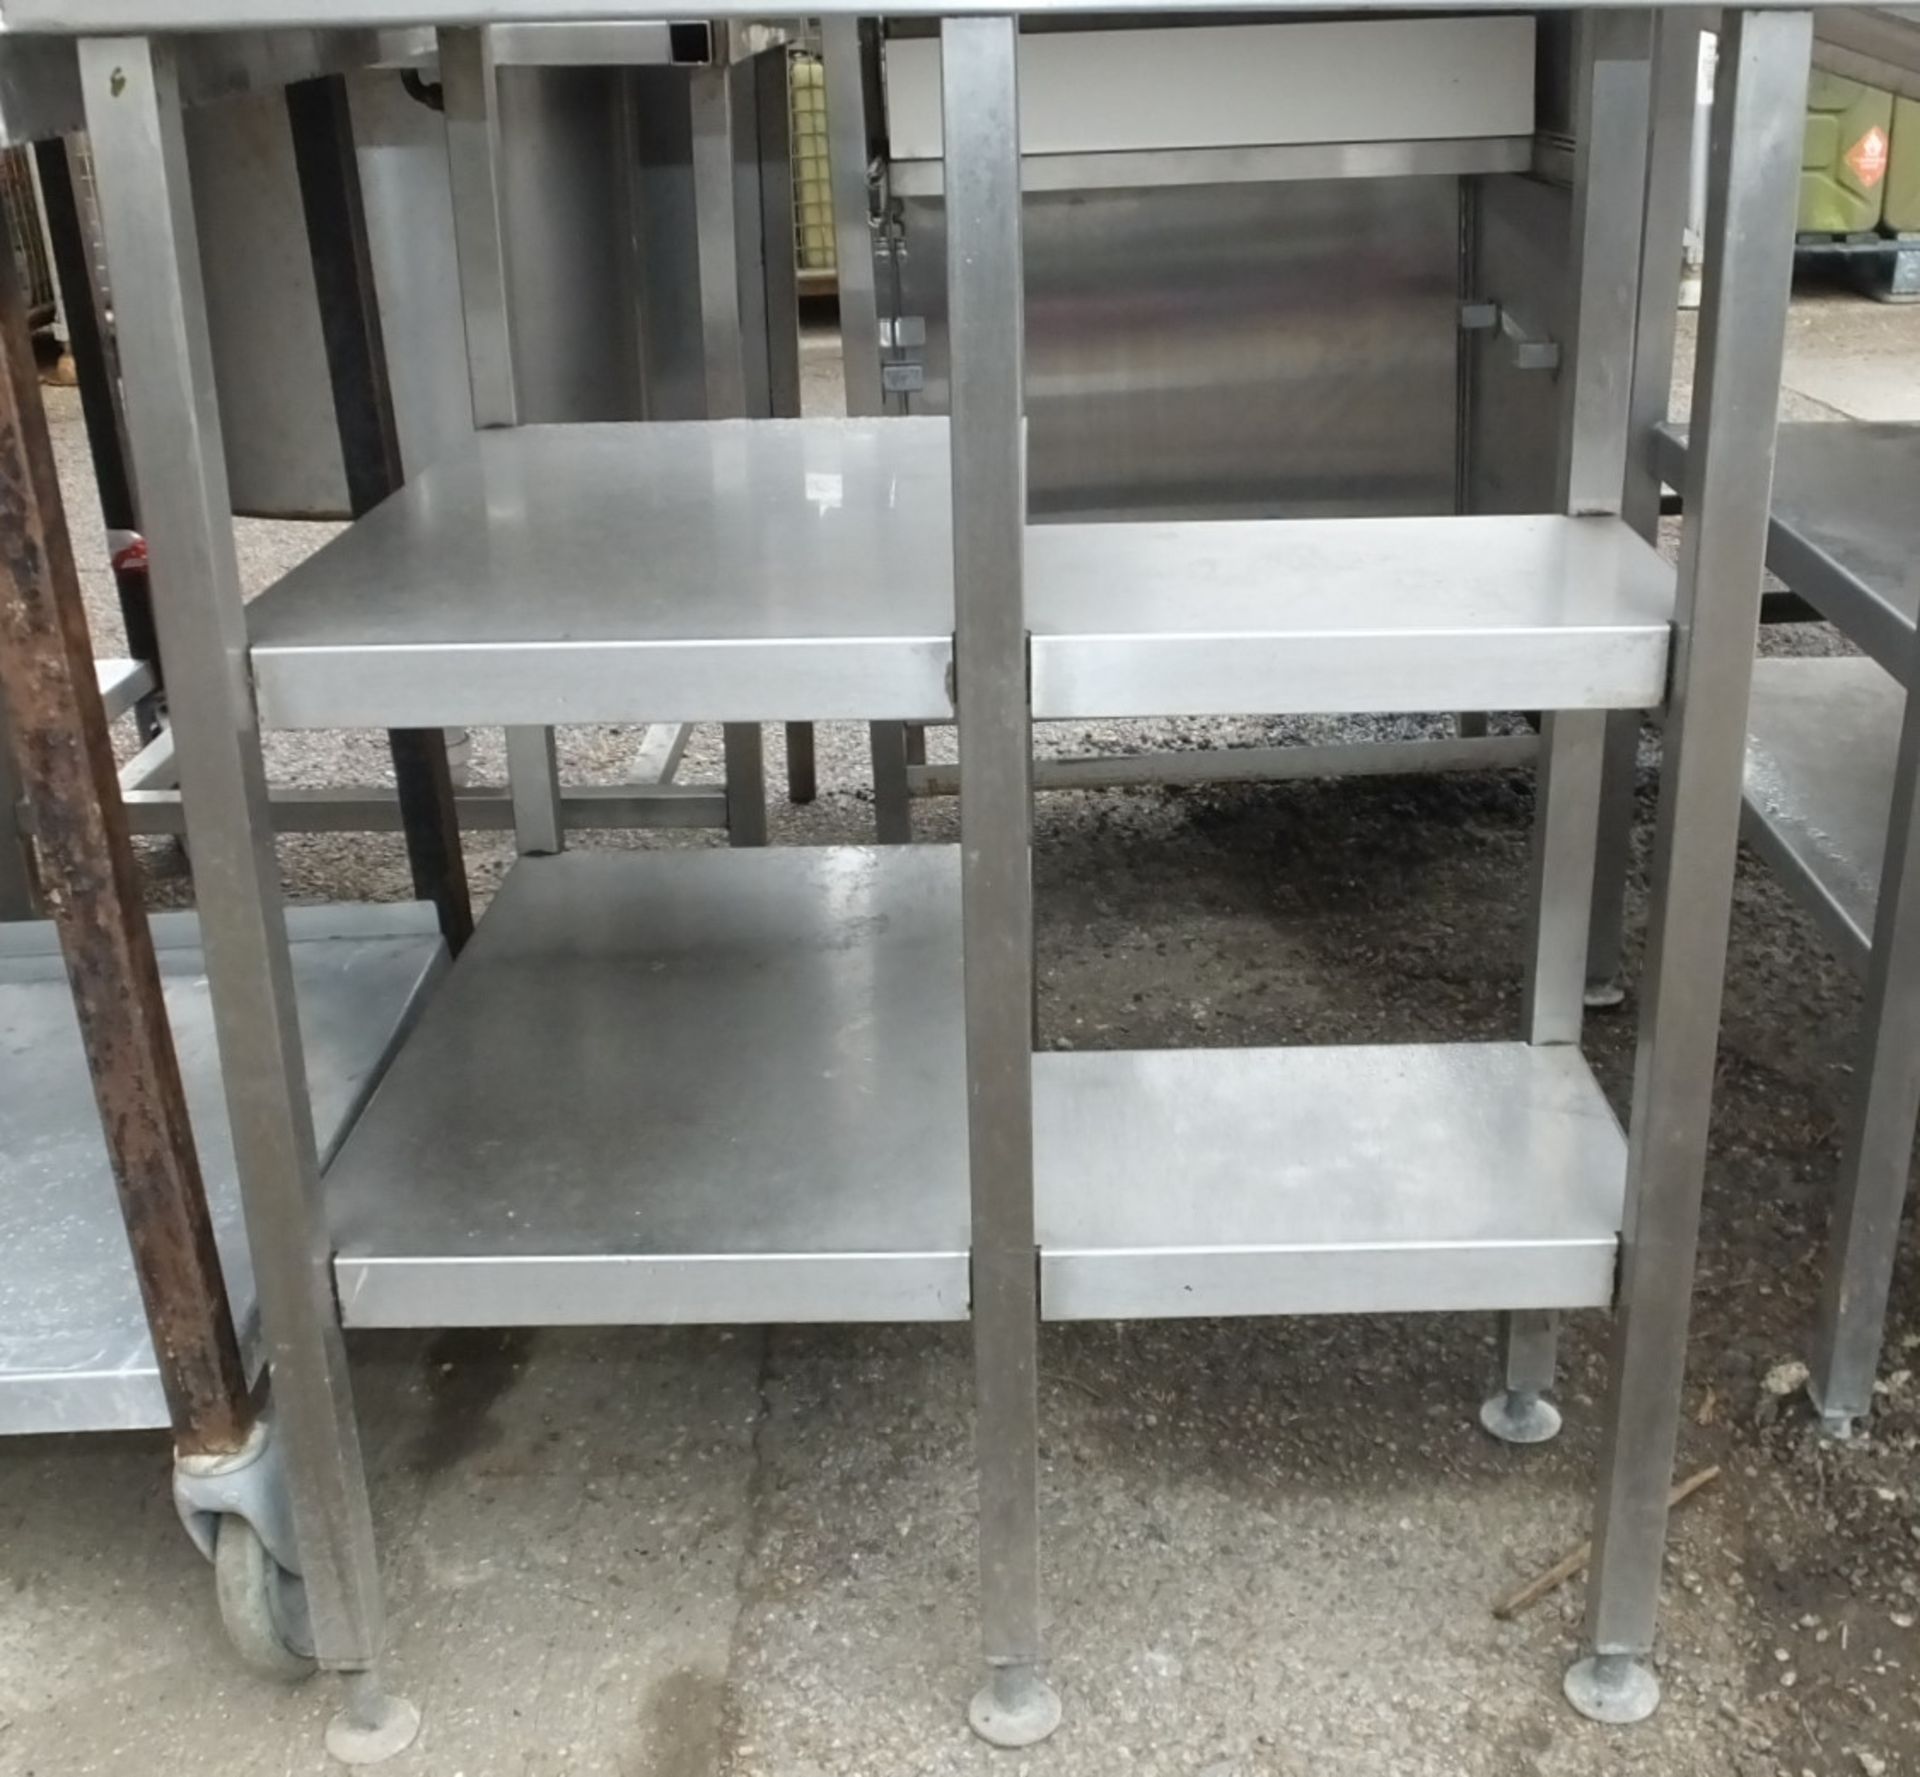 Stainless Steel Multi-Tier Corner Shelving Unit L 820 x W 690 x H 1370mm - on castors - Image 3 of 3